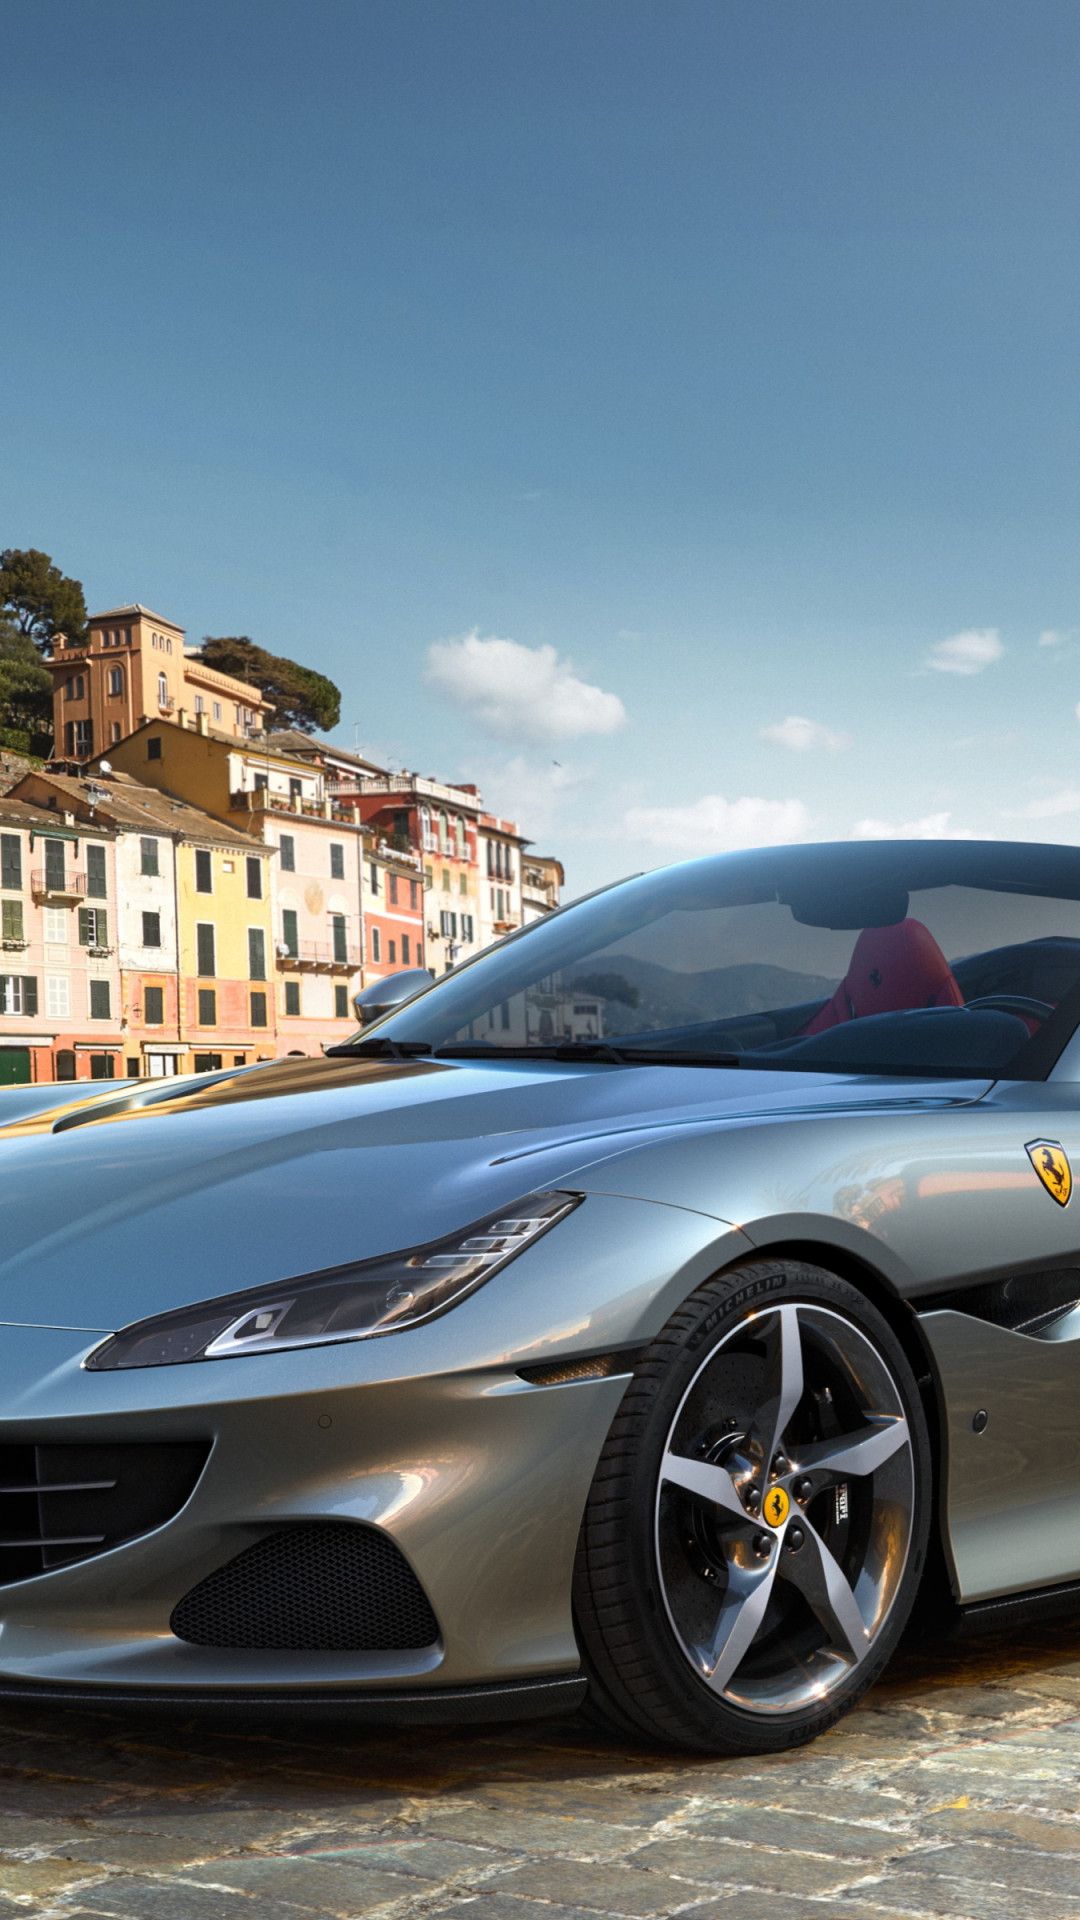 Download wallpaper: Ferrari Portofino M 1080x1920